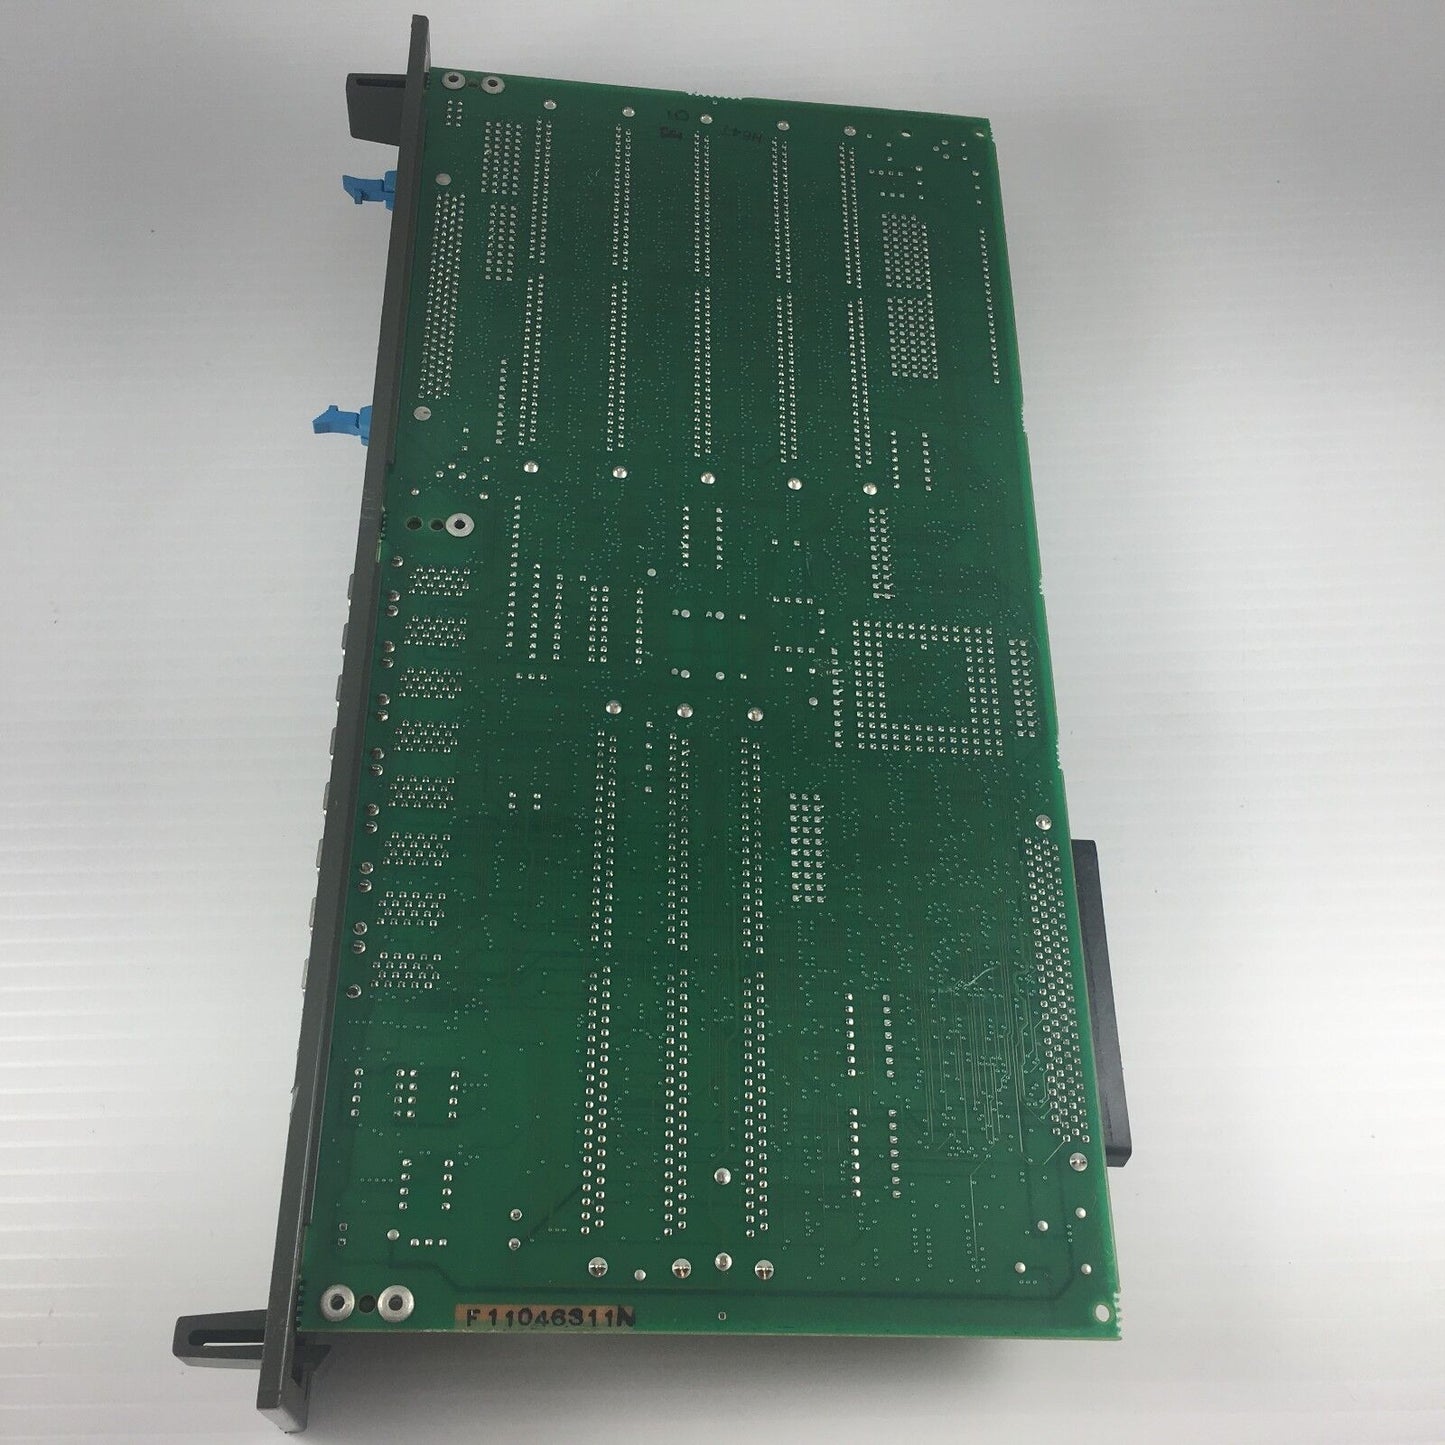 Fanuc, A16B-2201-0791, A16B-2201-0791/03B, Processor PCB Vision